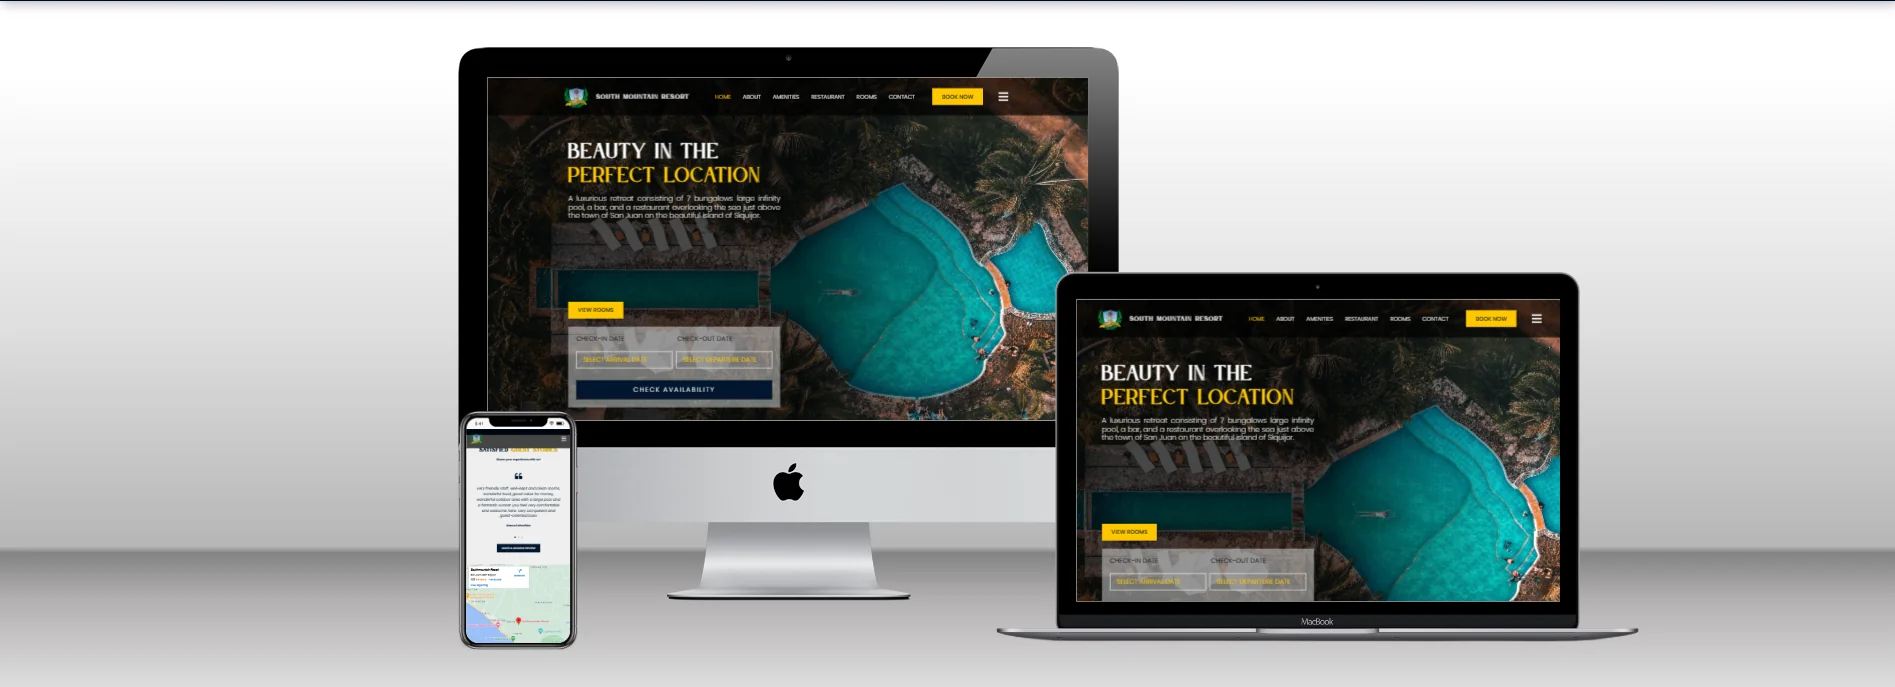 Website - South Mountain Resort